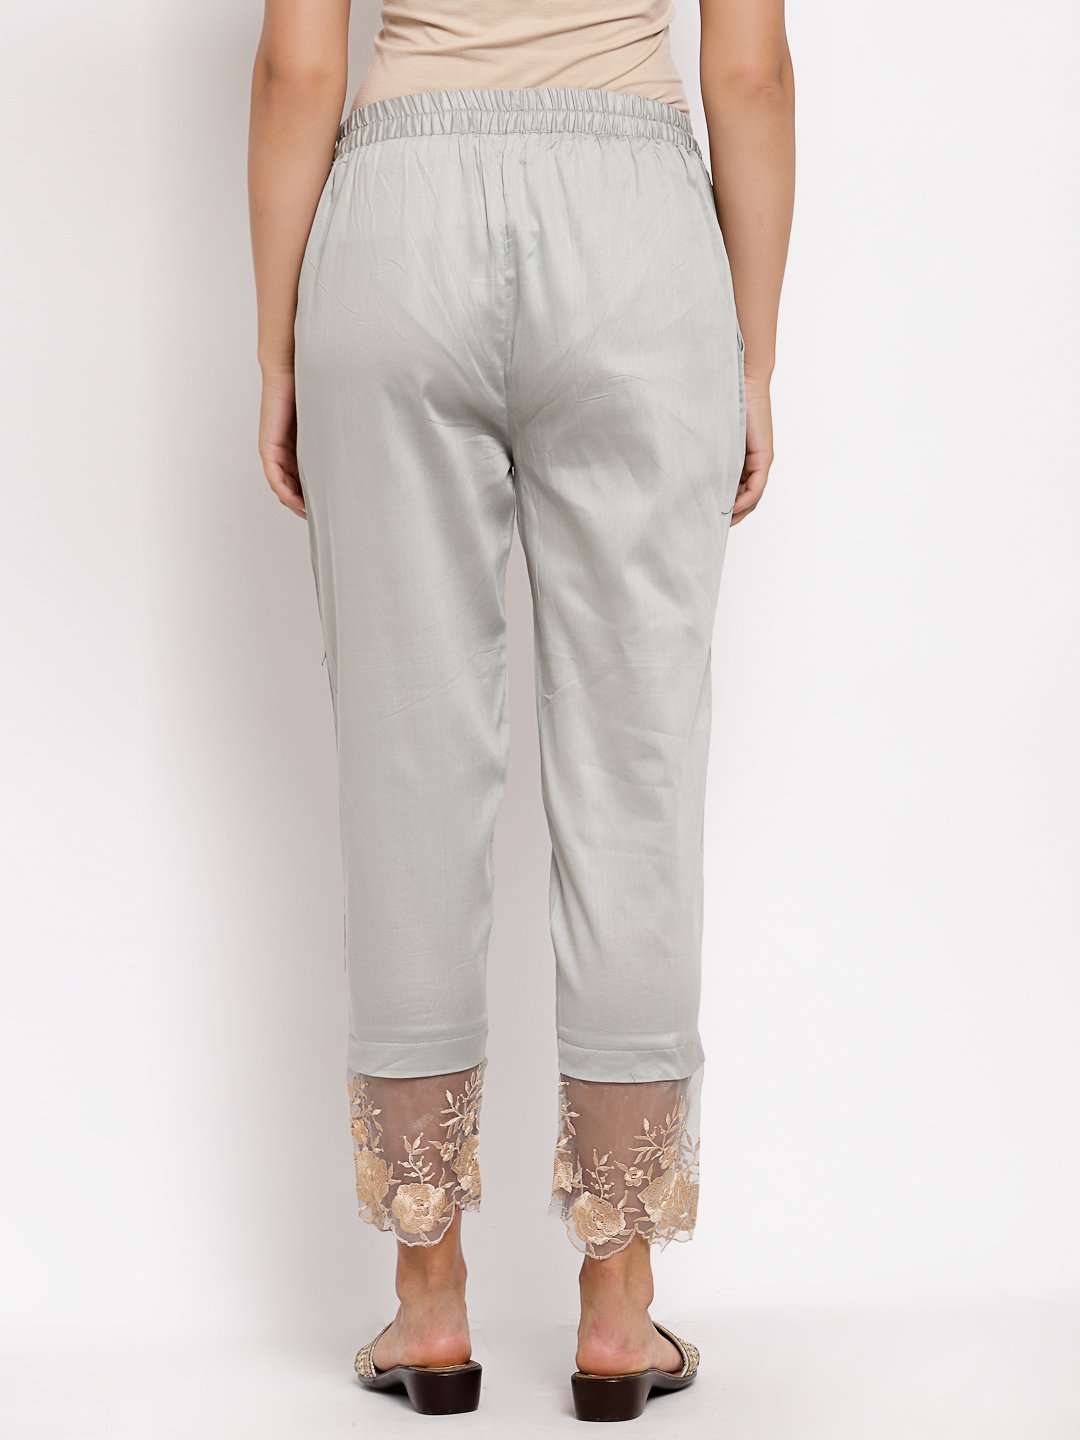 Women's Grey Cotton Solid Casual Trouser - Myshka